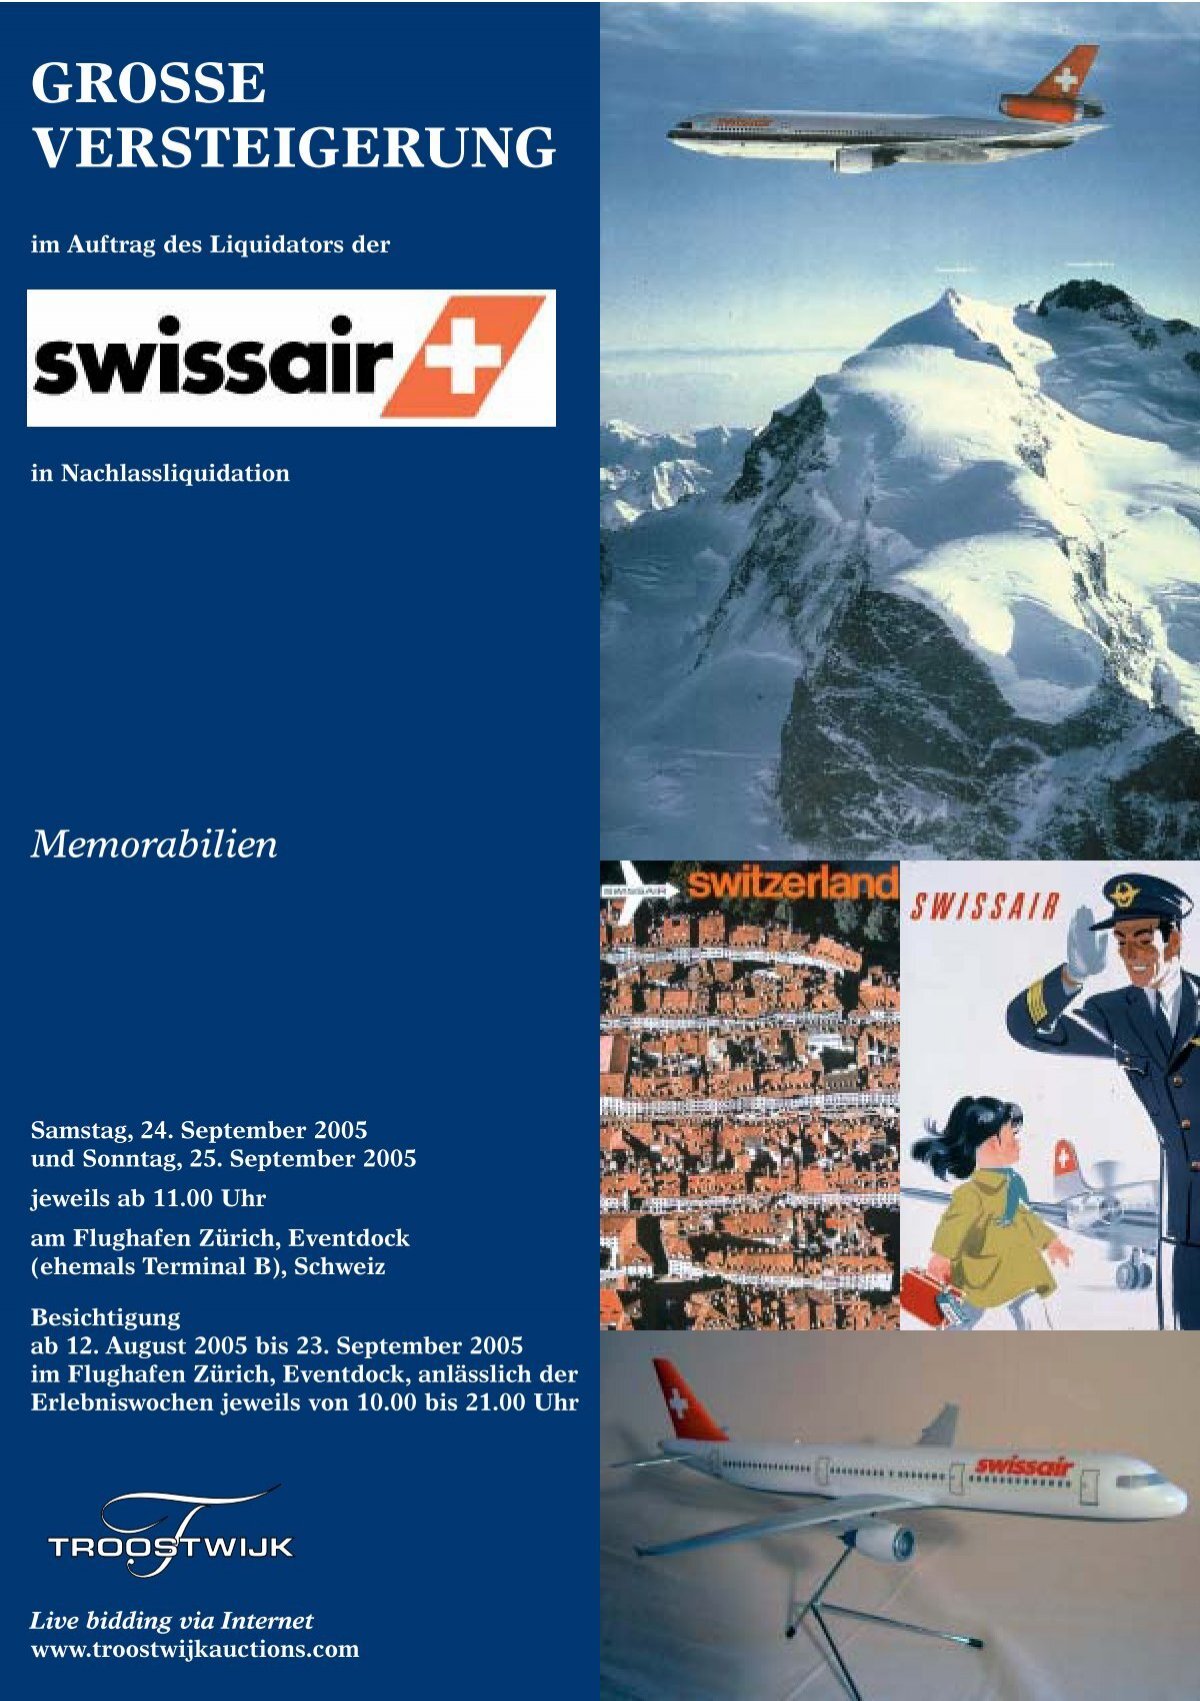 sonntag, 25. september 2005 - Liquidator Swissair